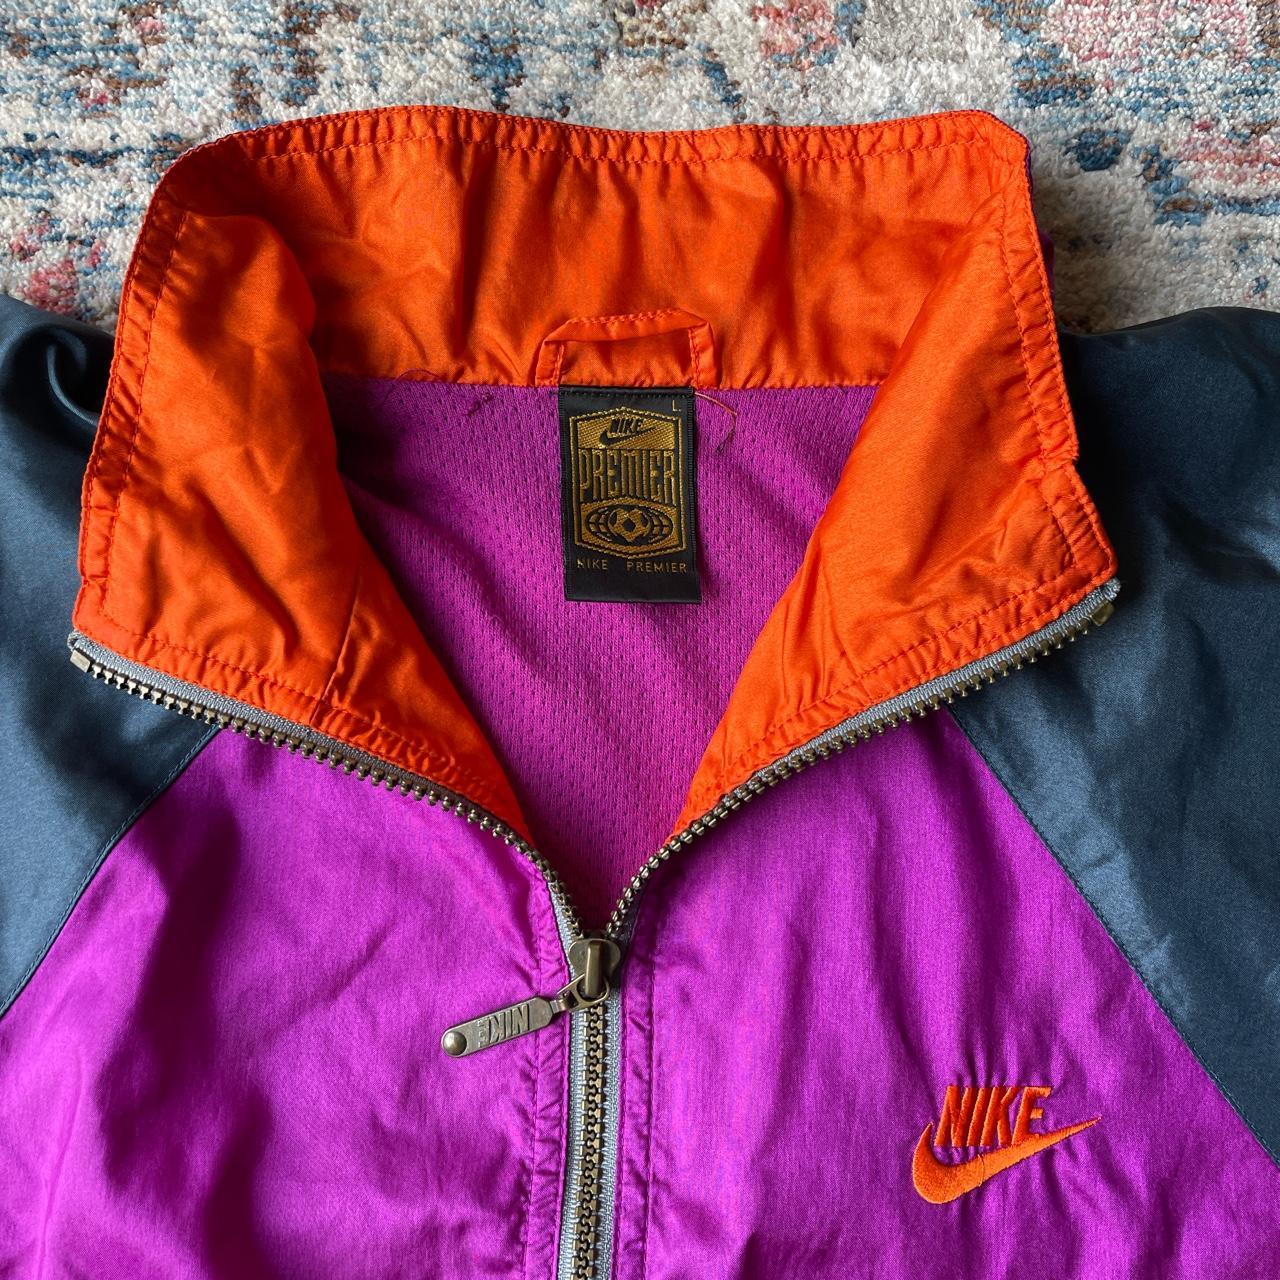 Vintage Nike Purple and Grey Jacket